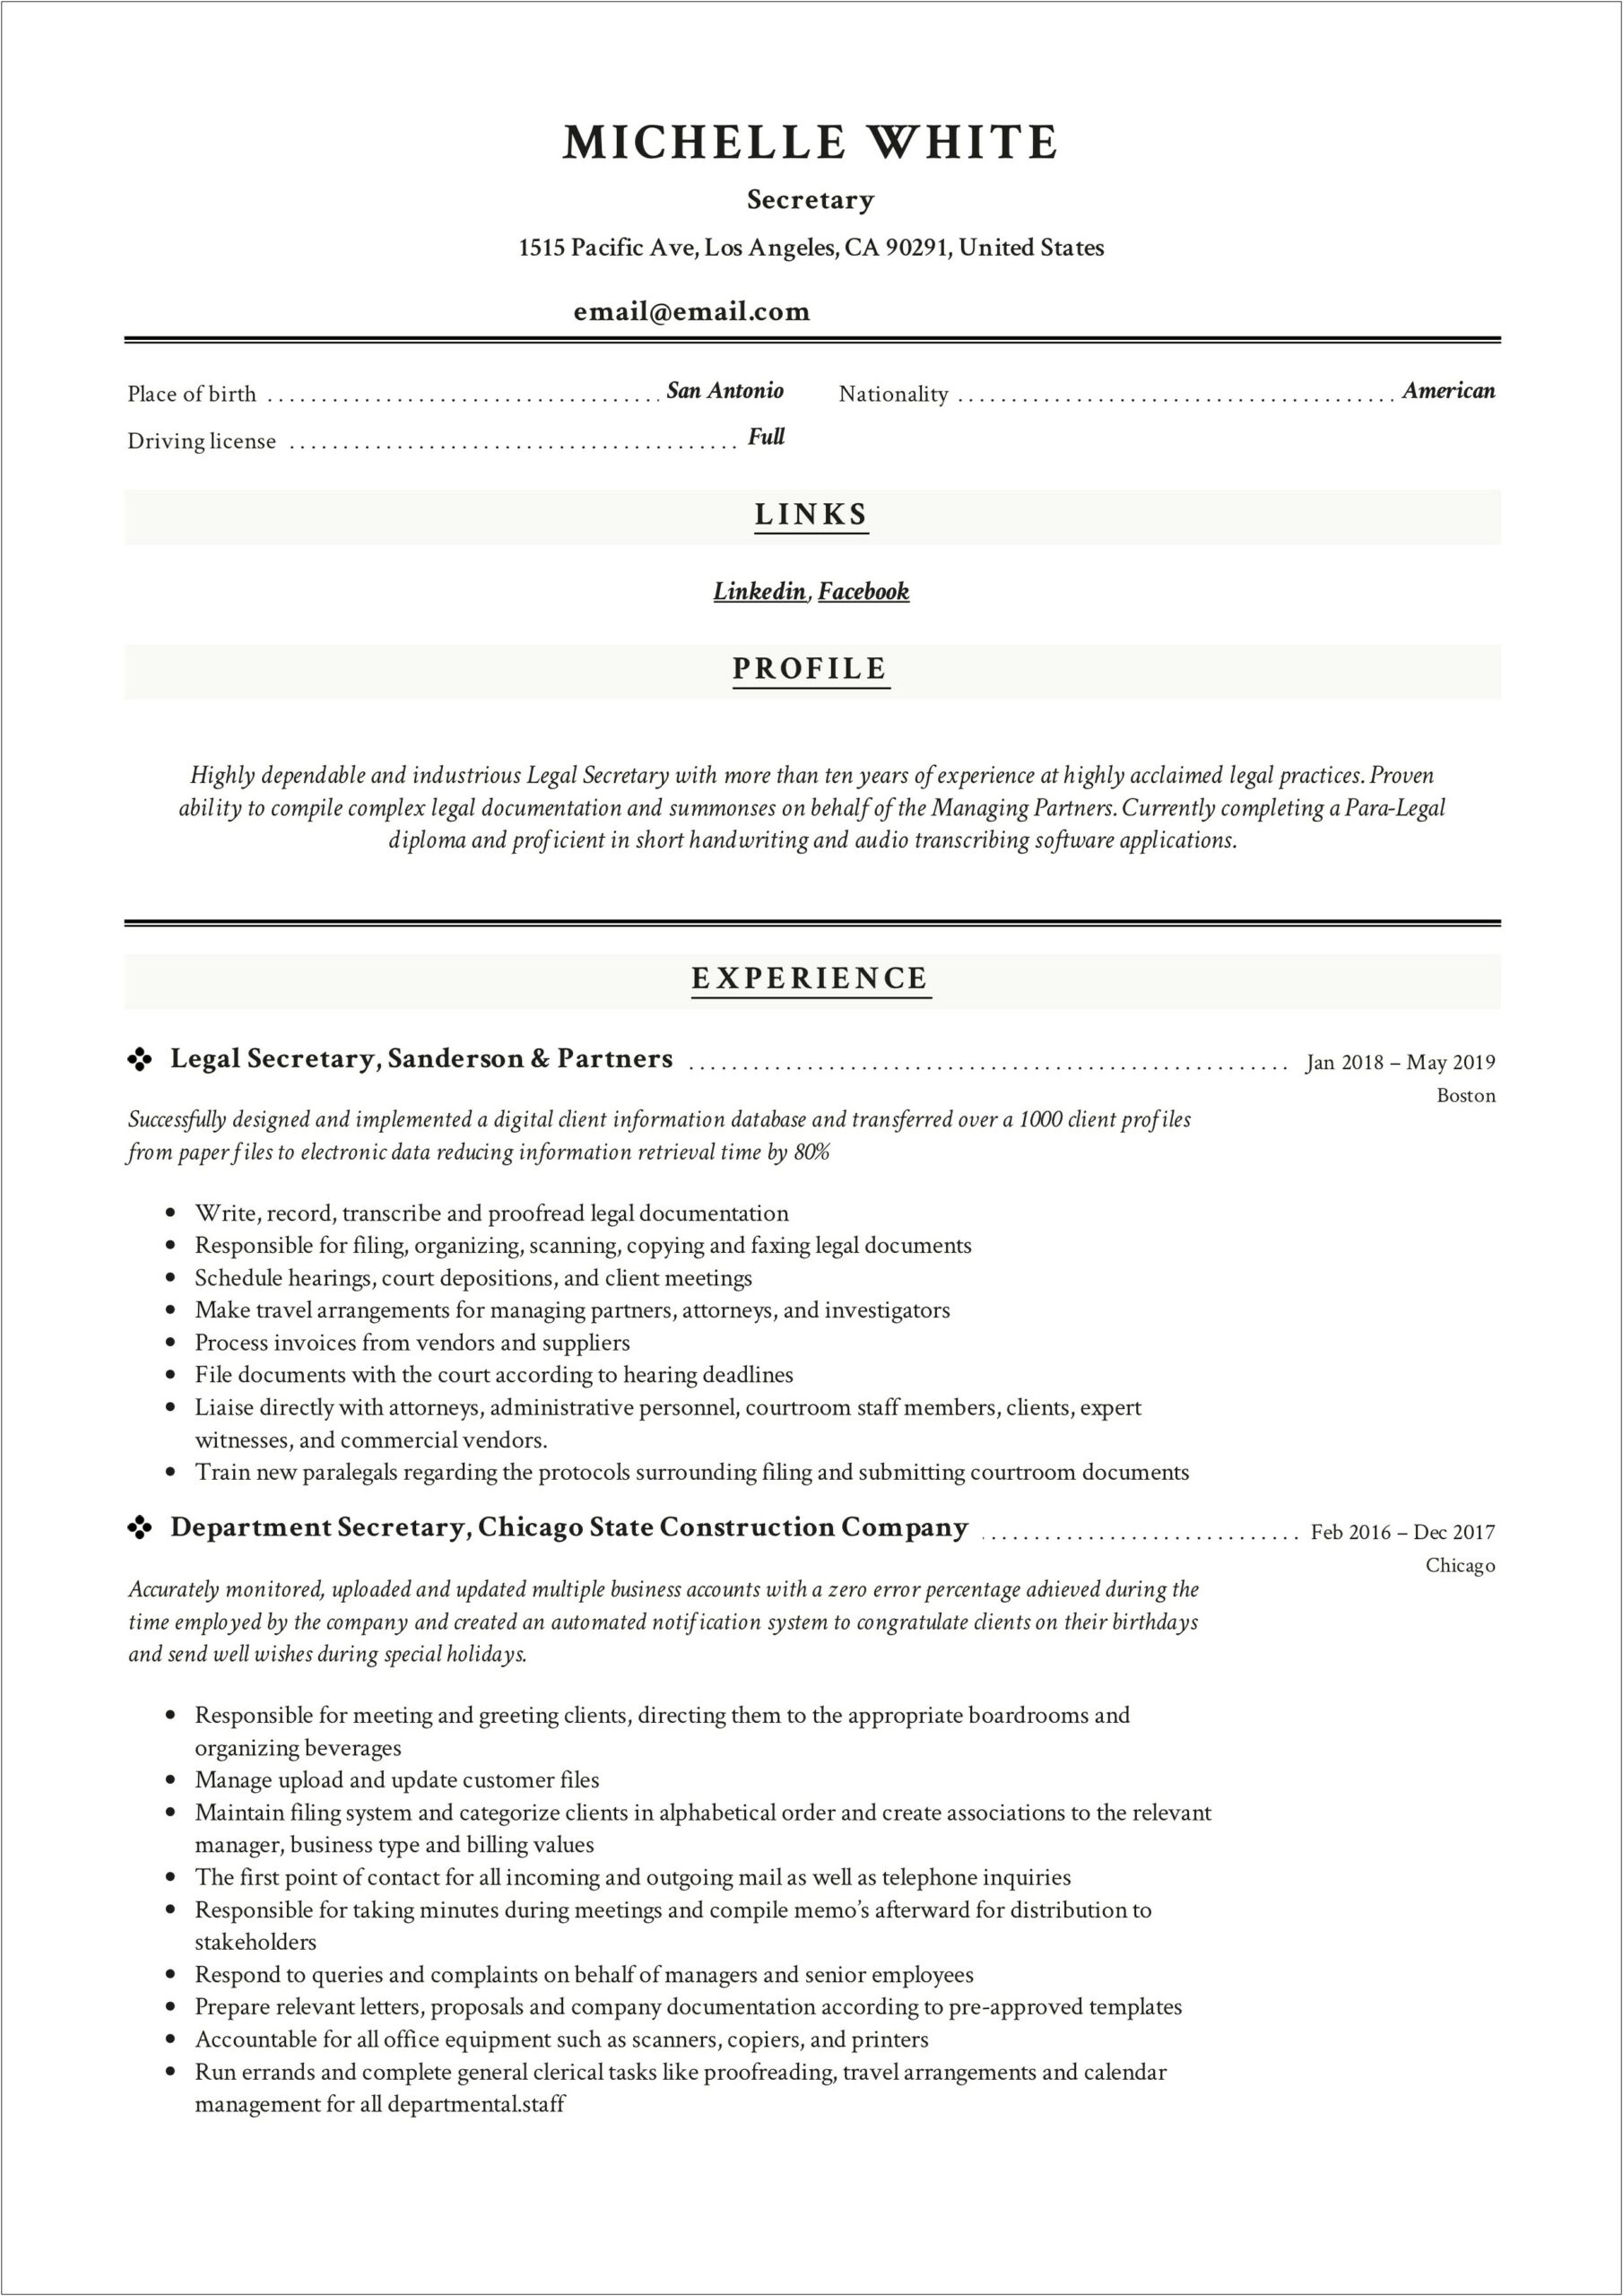 Resume Objective For Office Secretary